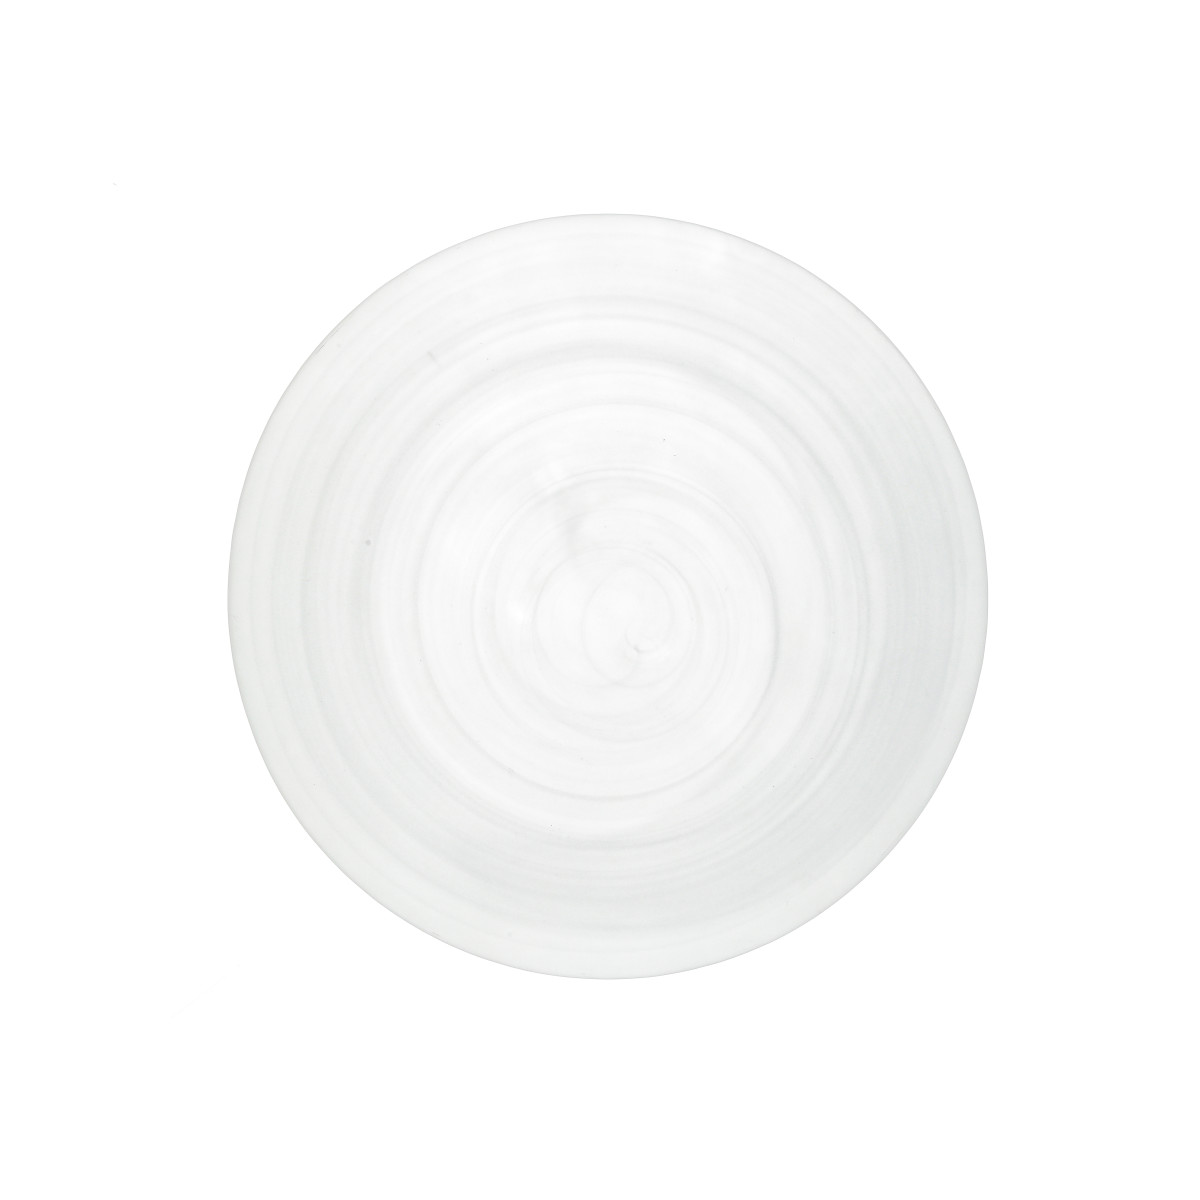 La Jolla White Dinner Plate 10.5"